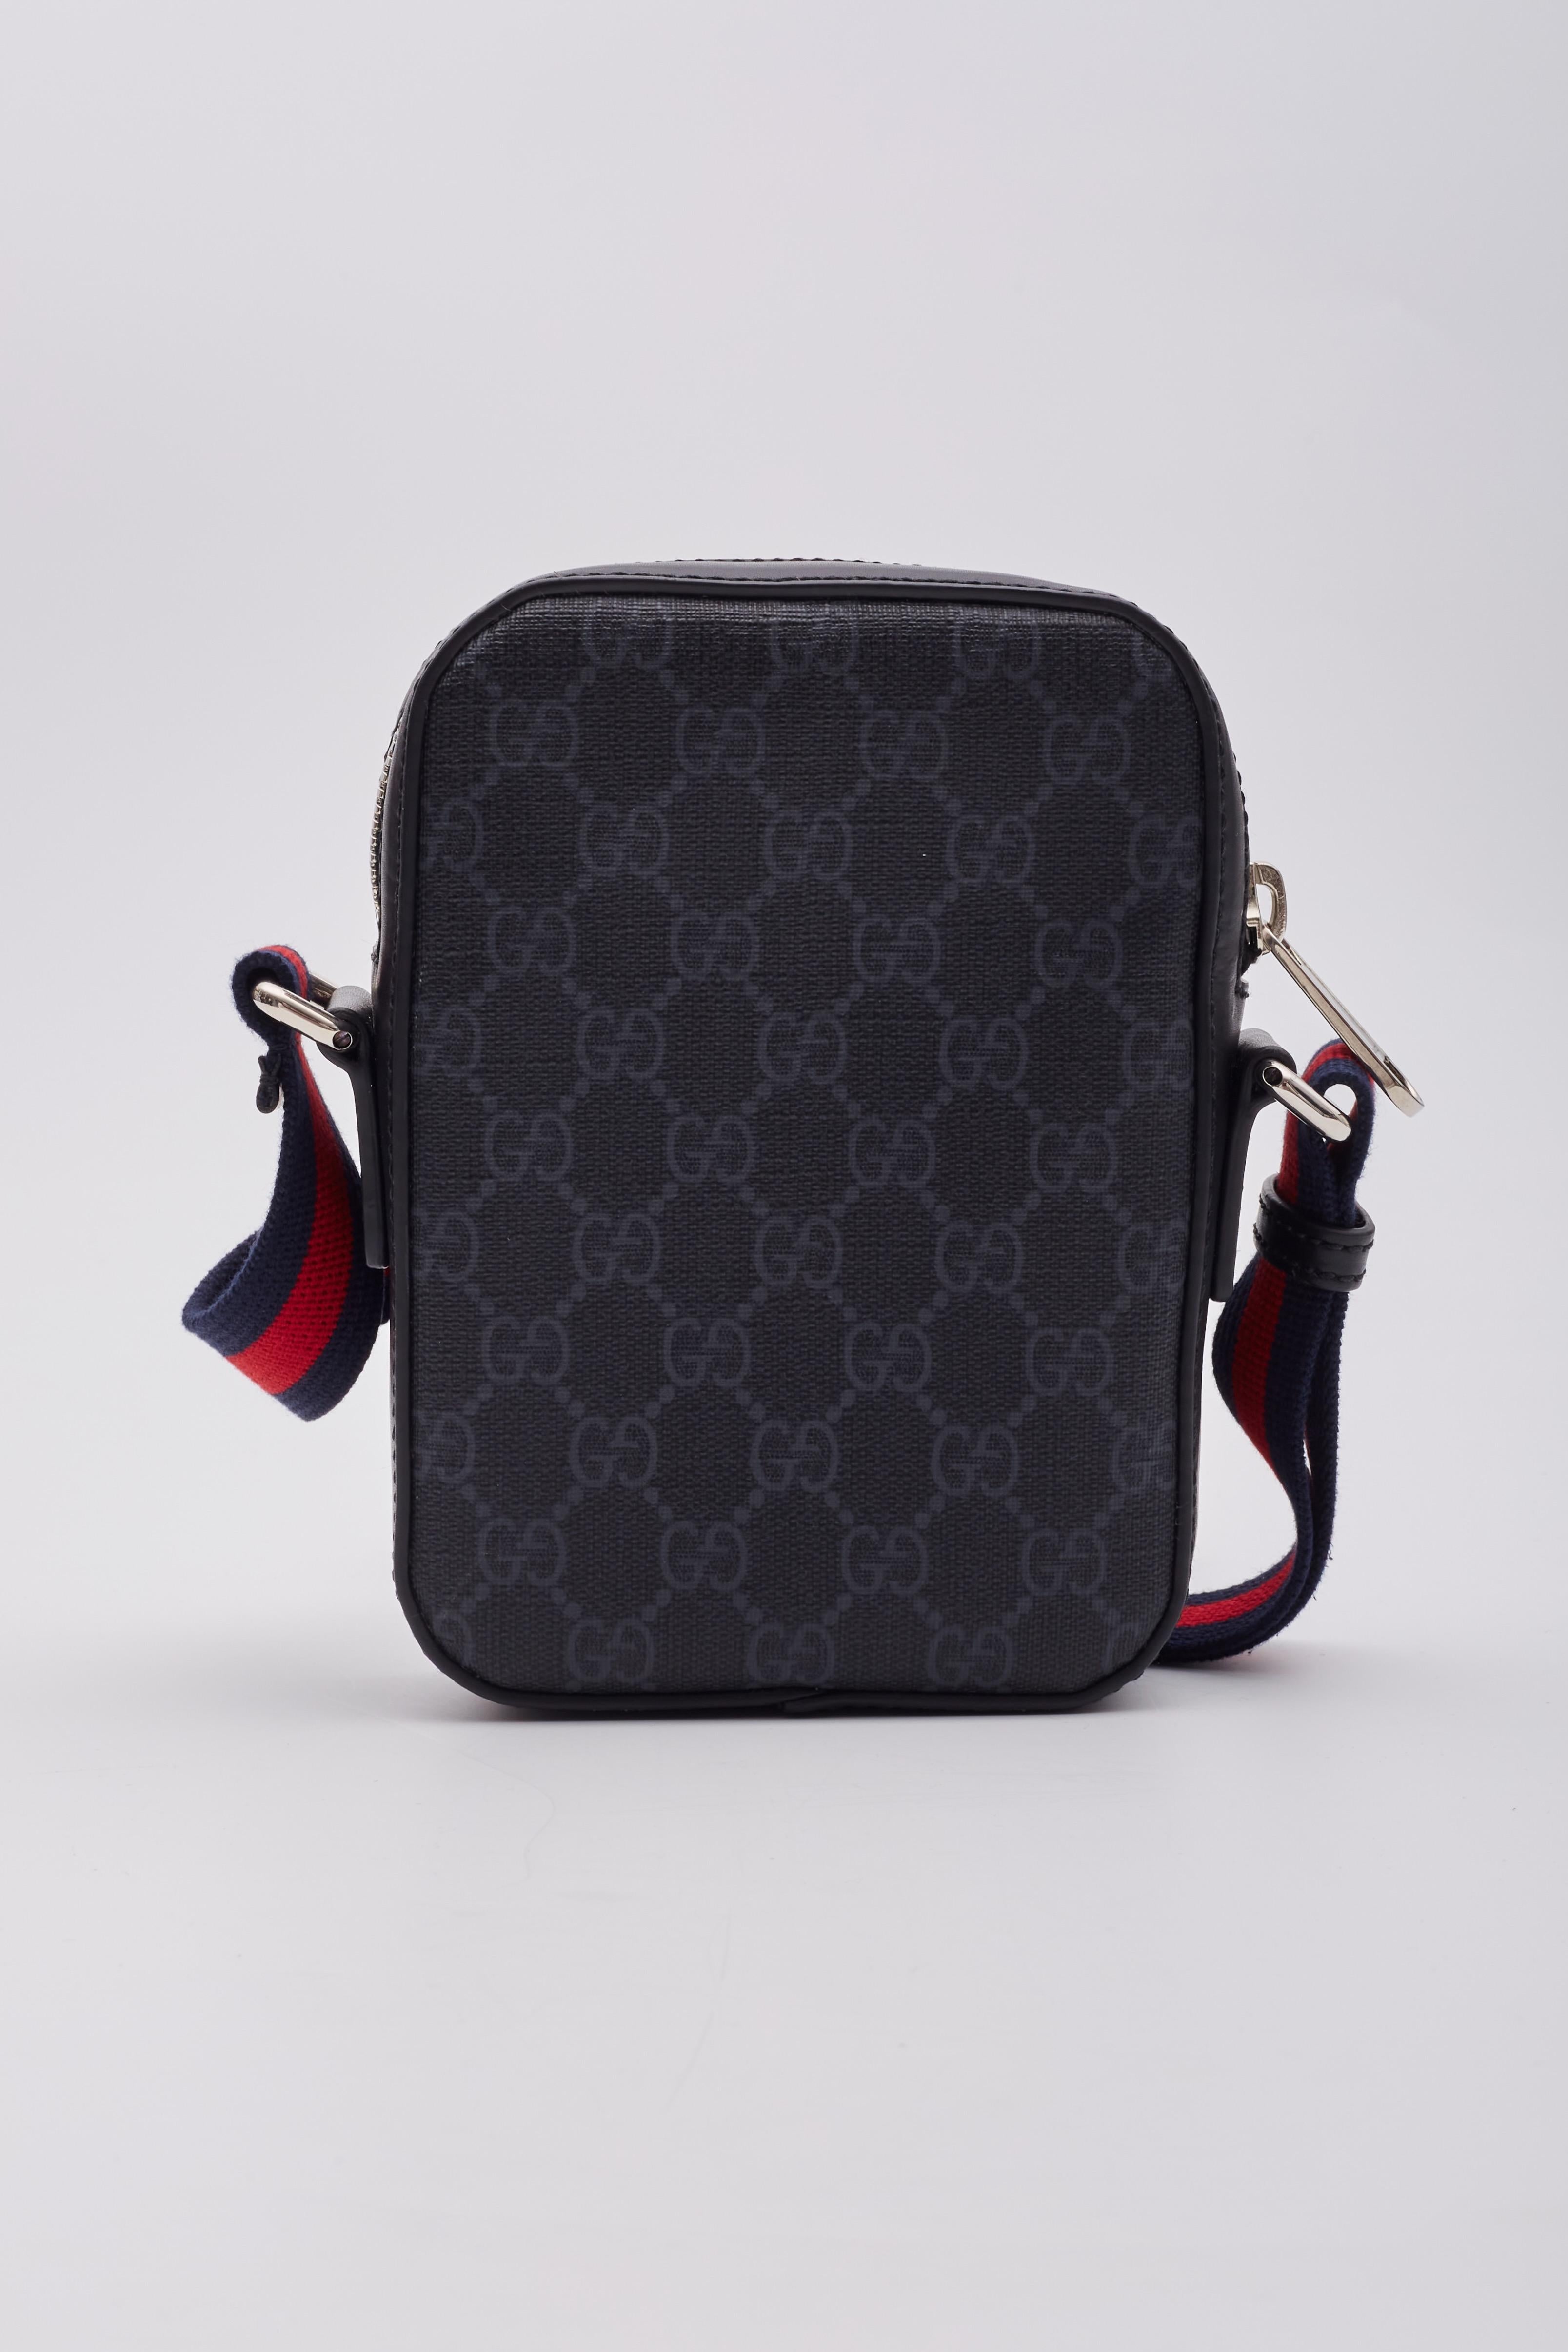 Women's or Men's Gucci GG Supreme Monogram Web Messenger Bag Black For Sale